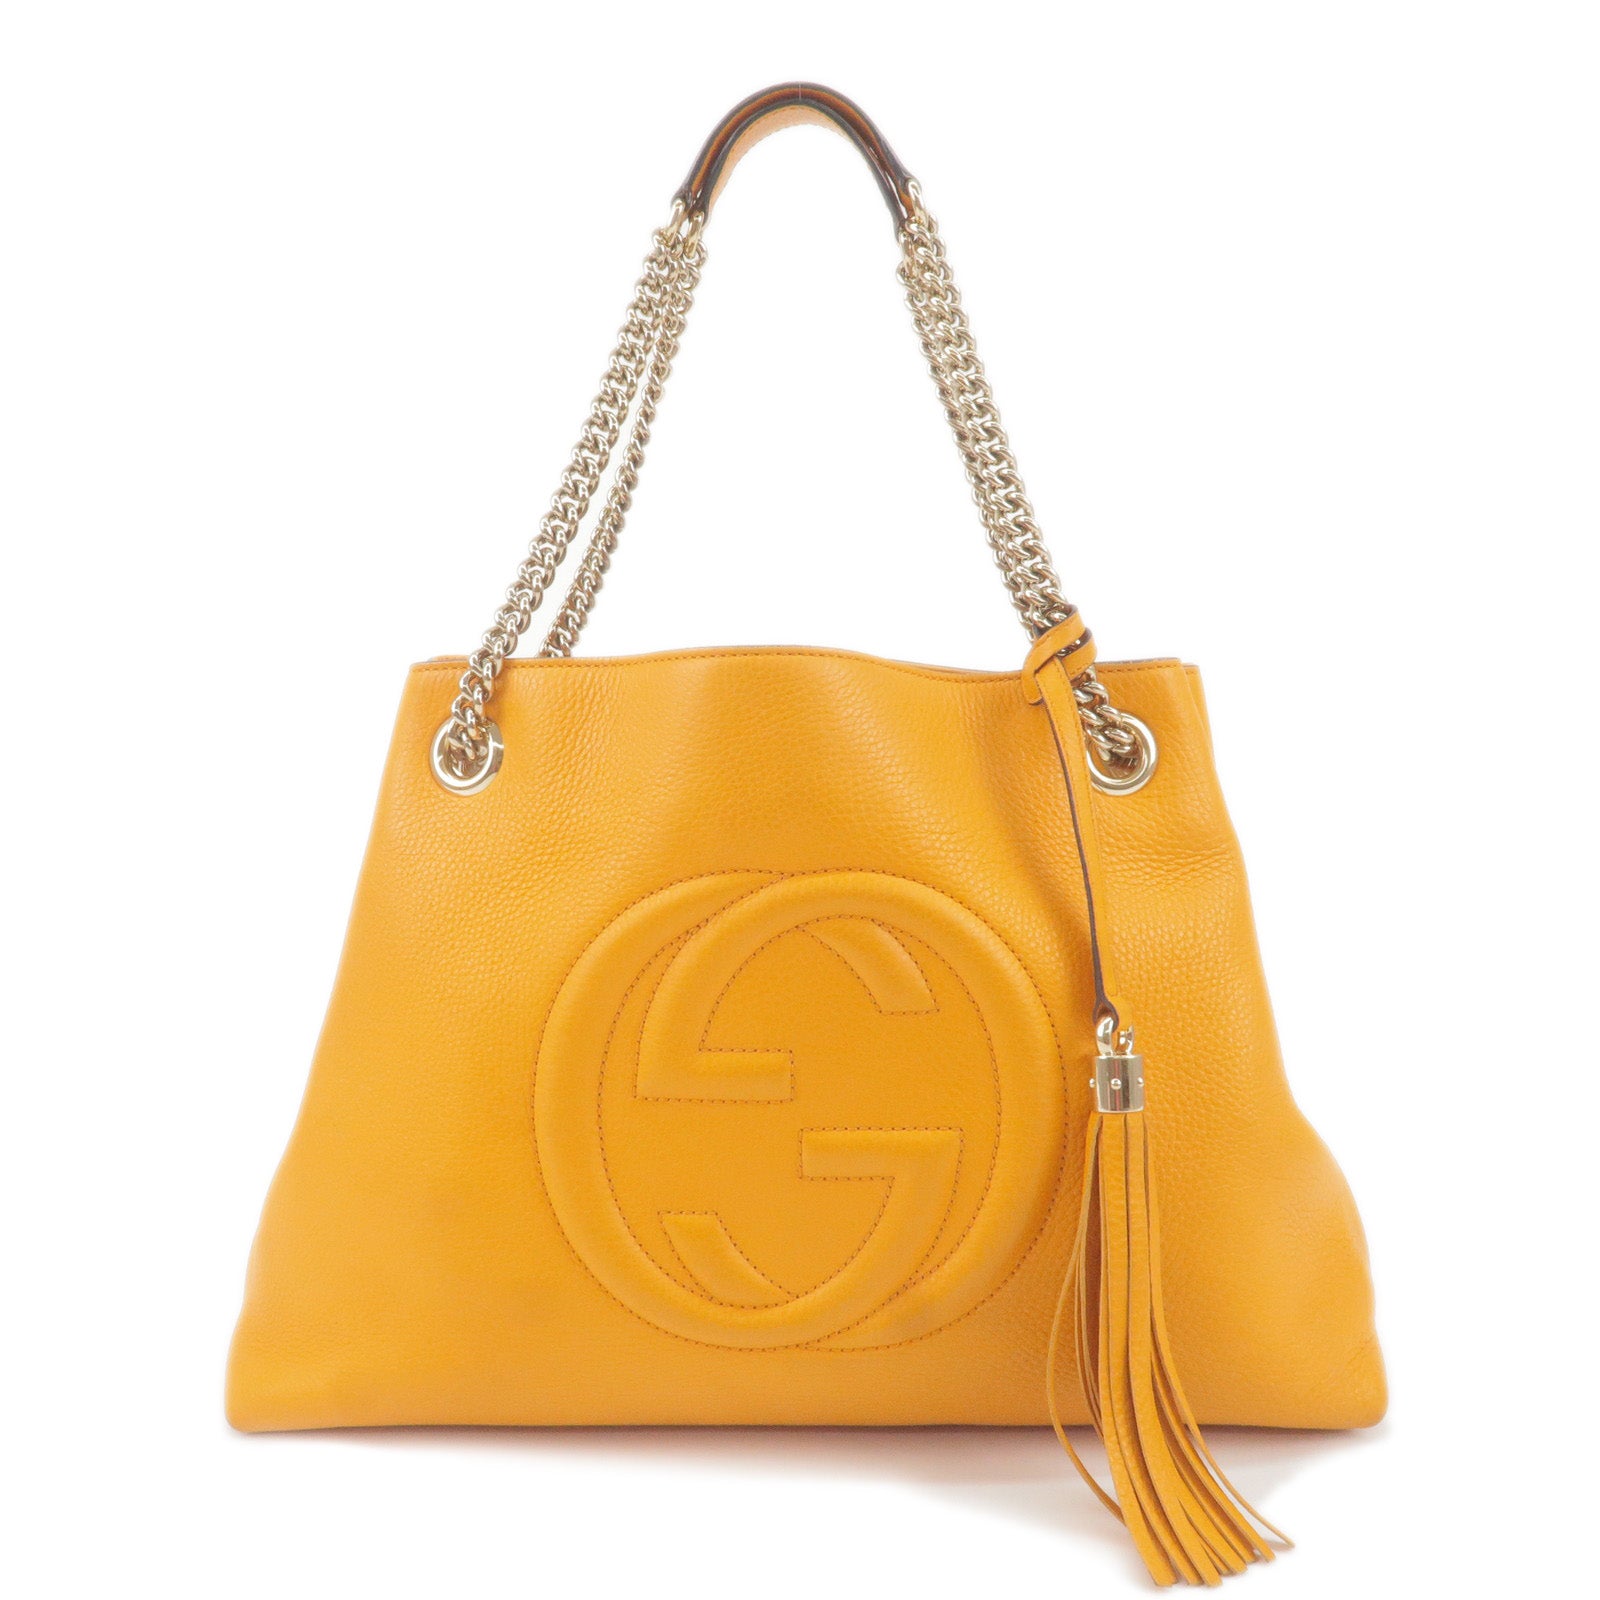 GUCCI-SOHO-Leather-Chain-Shoulder-Bag-Orange-308982